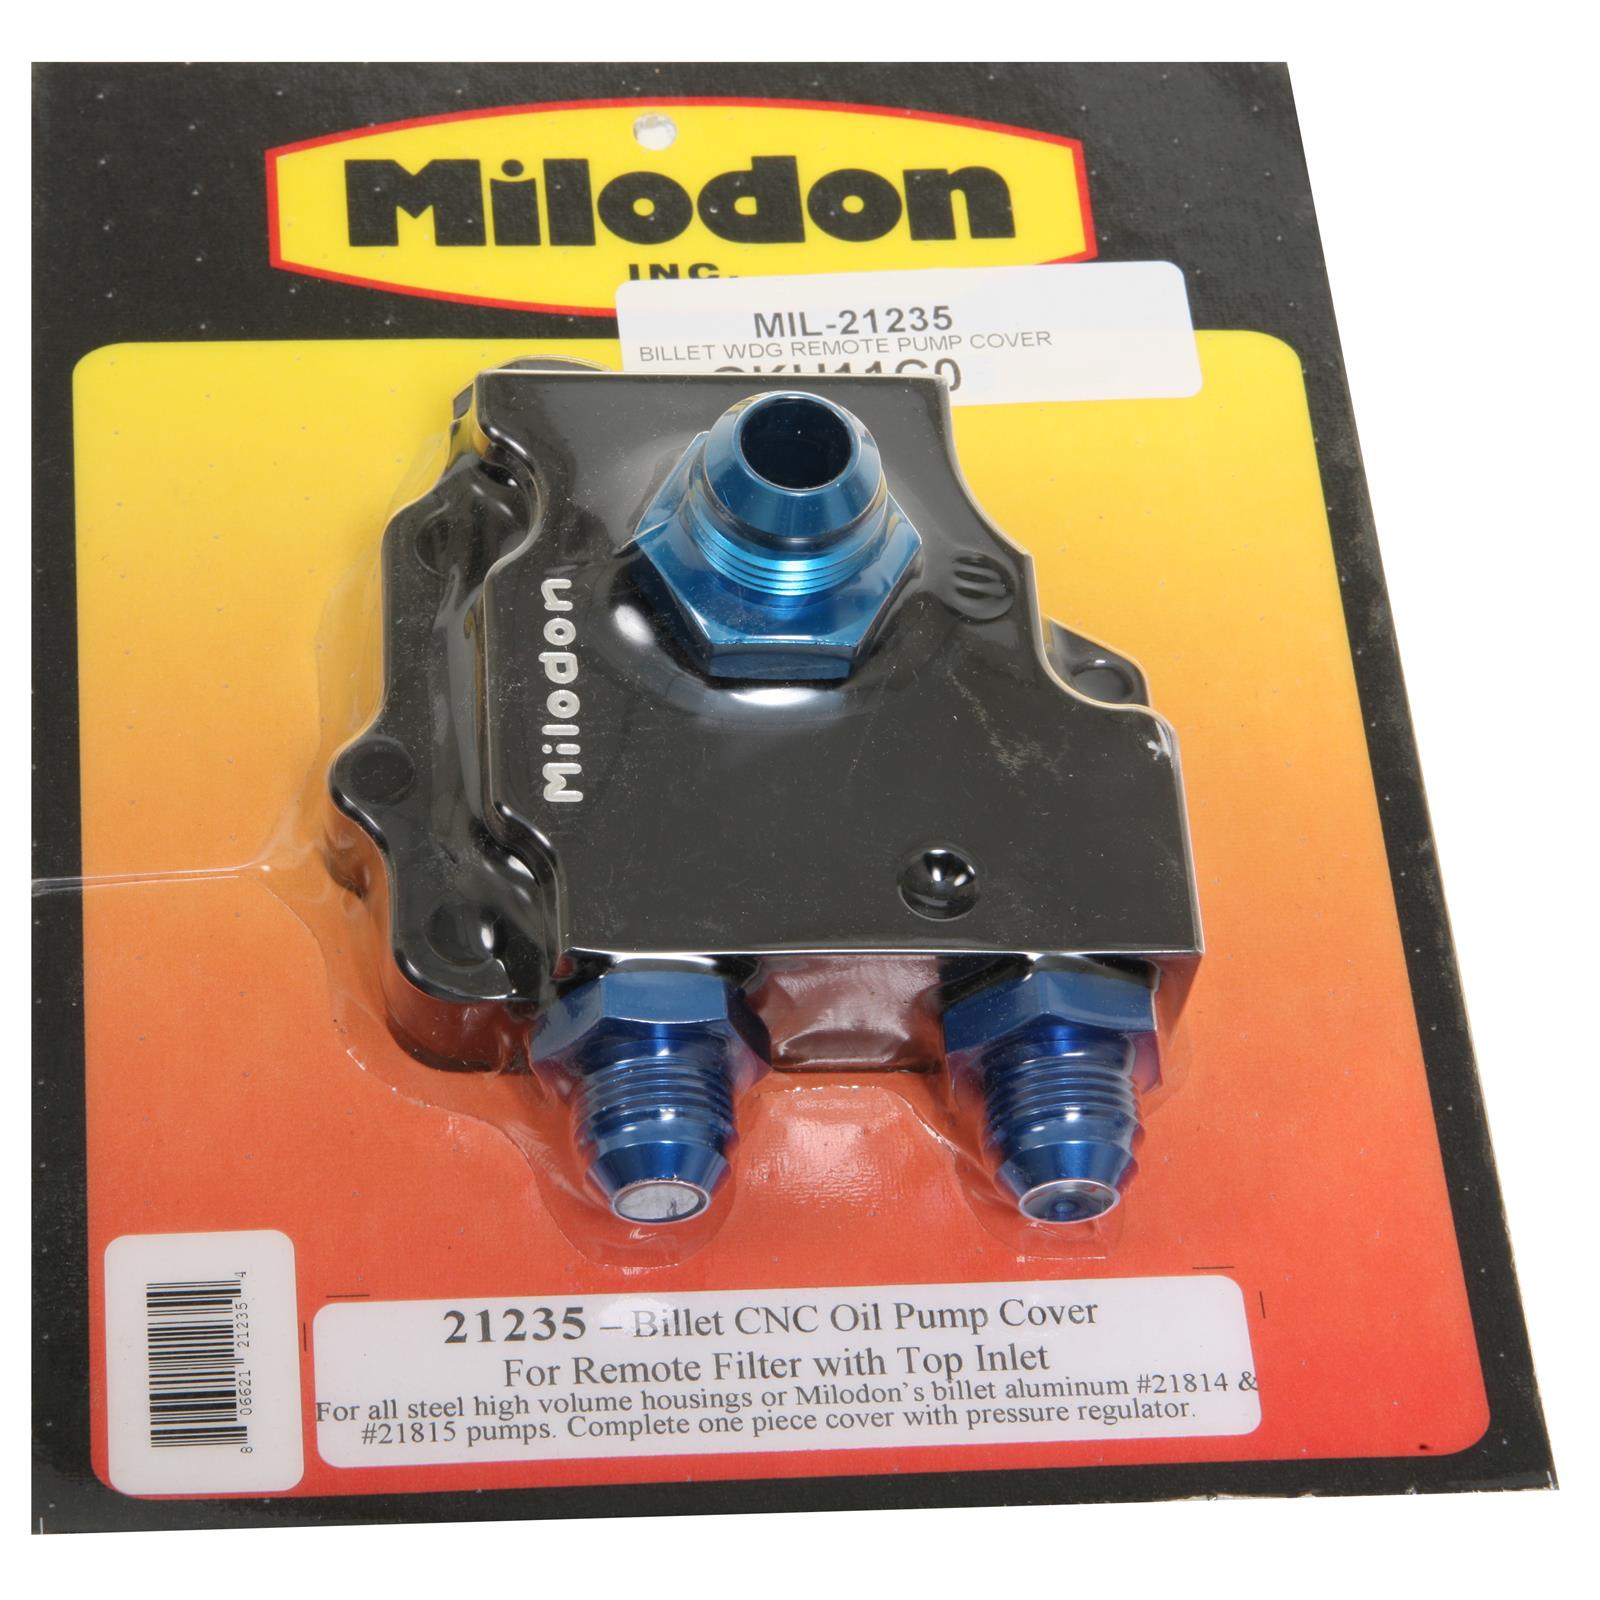 Andrew Halliday Brig Dårlig faktor Milodon 21235 Milodon Billet Aluminum Oil Pump Covers | Summit Racing